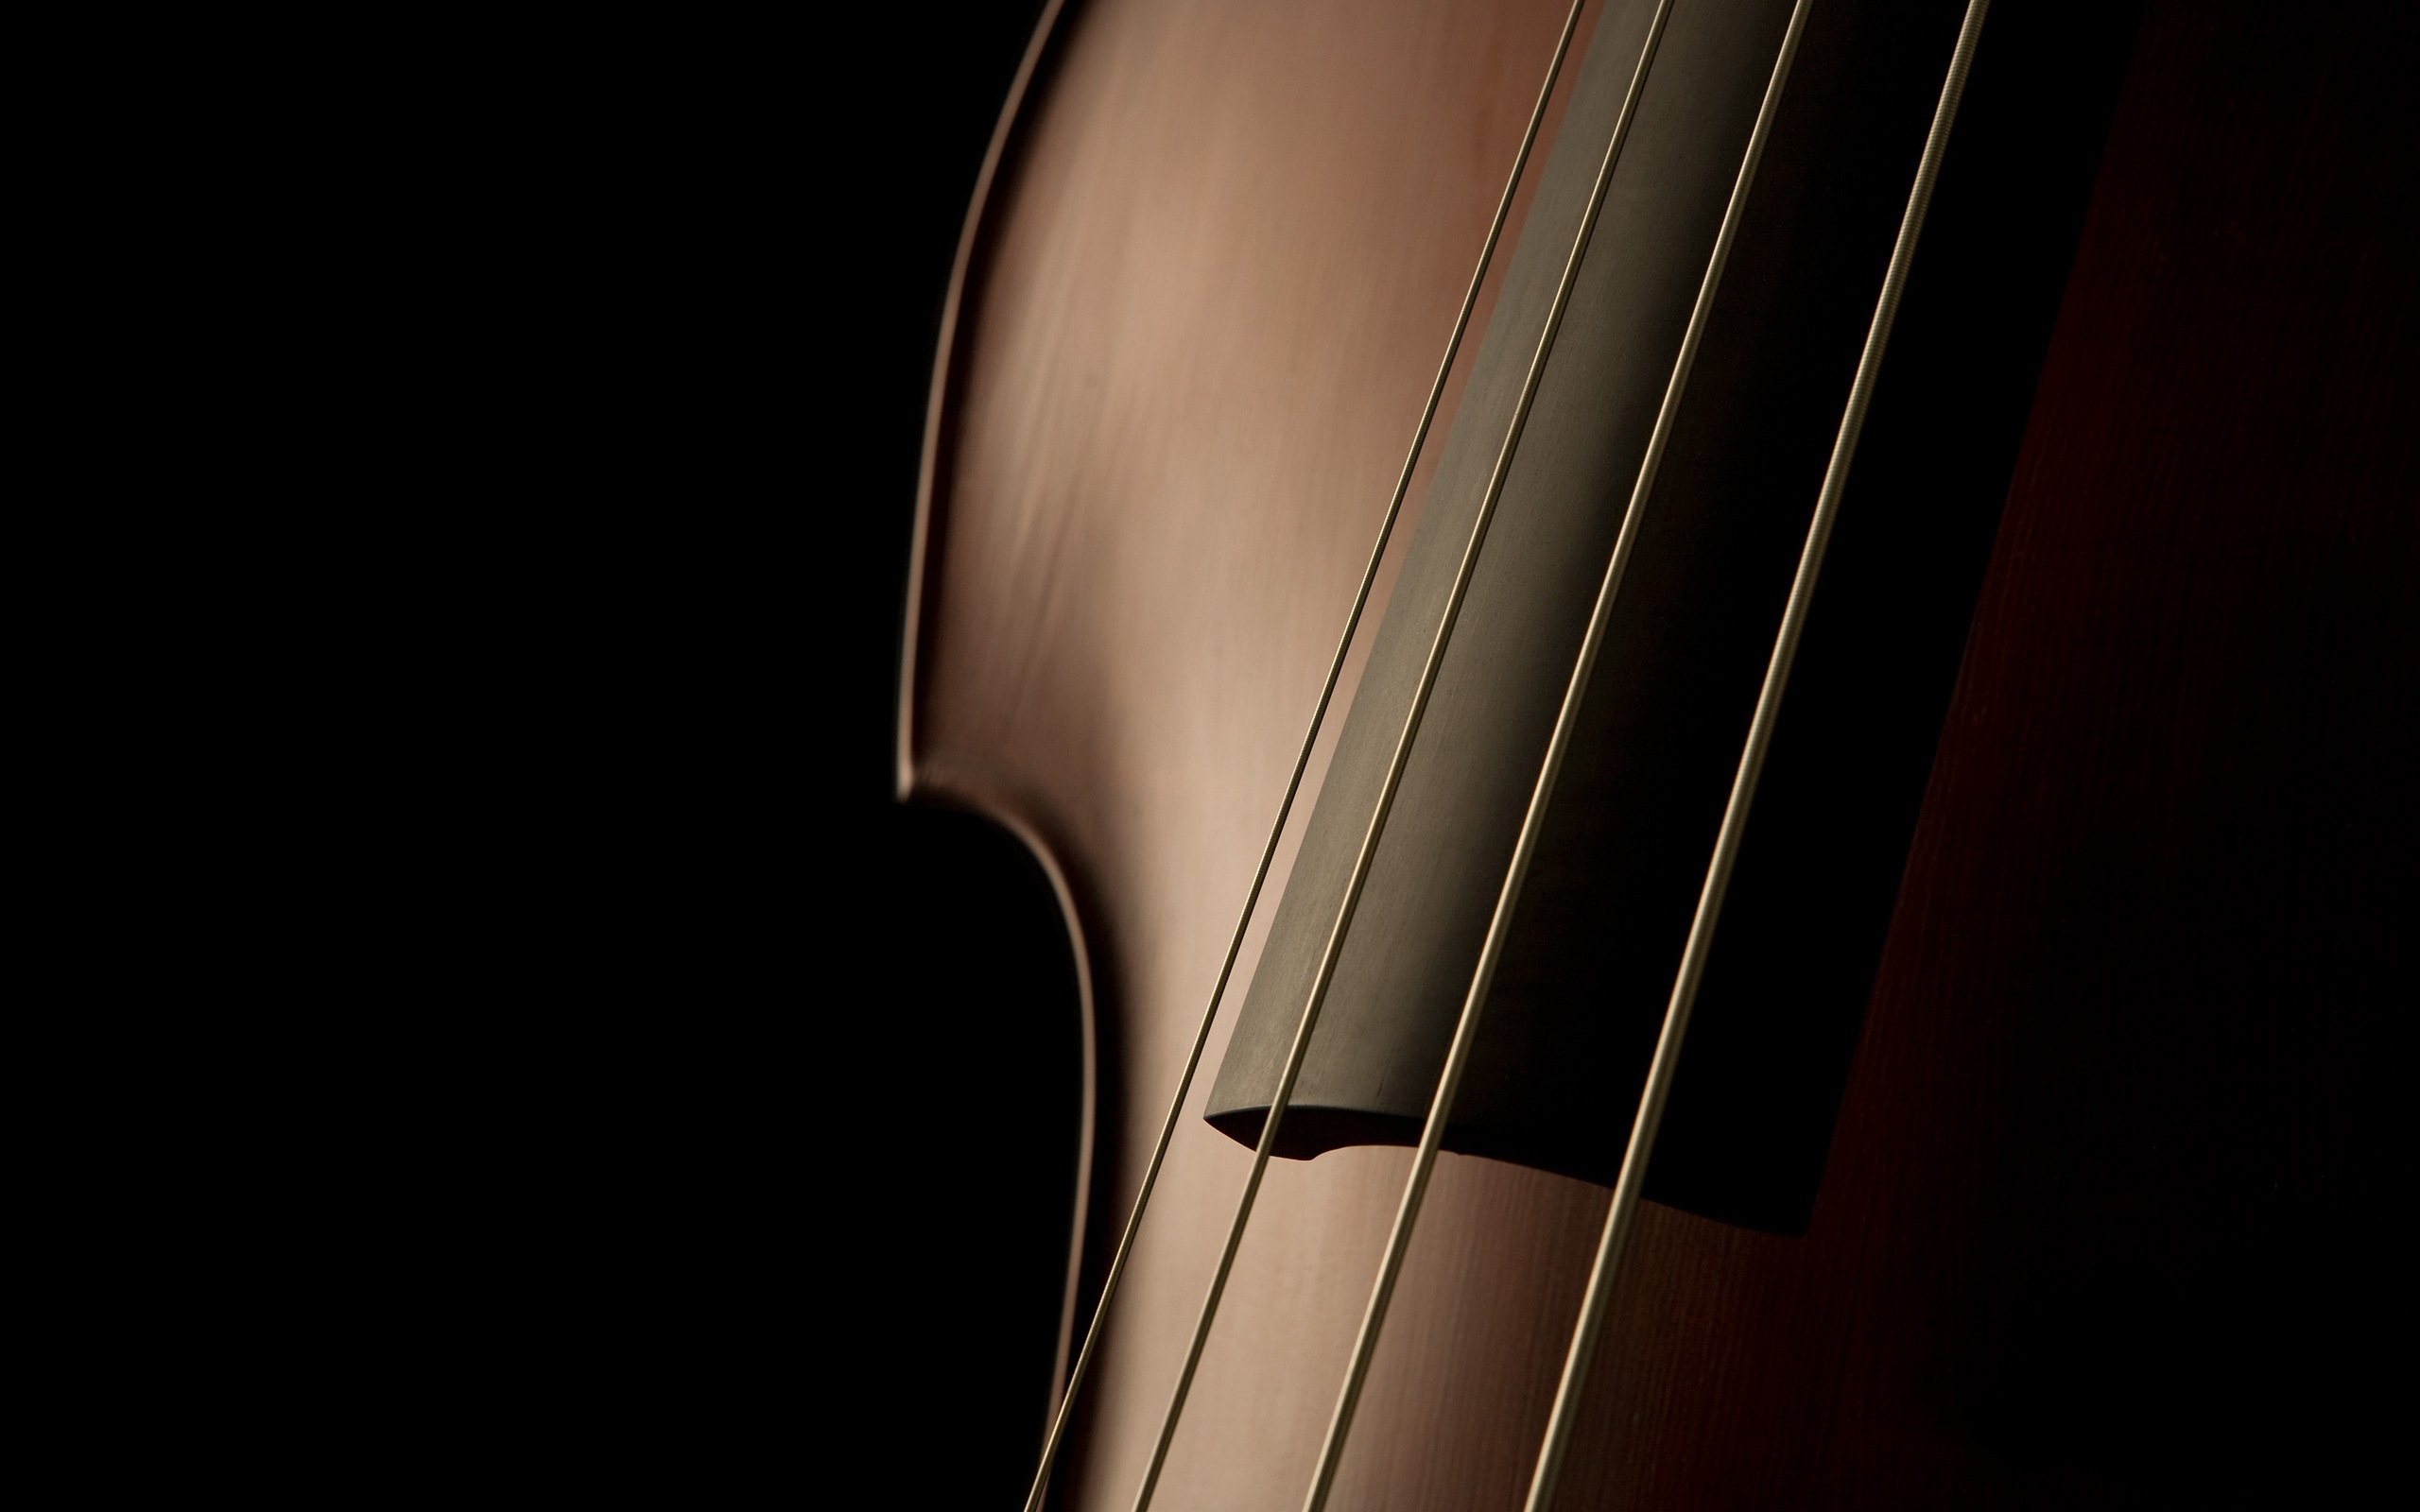 Violin Shape Strings Elegant Refined Stock Photos Image